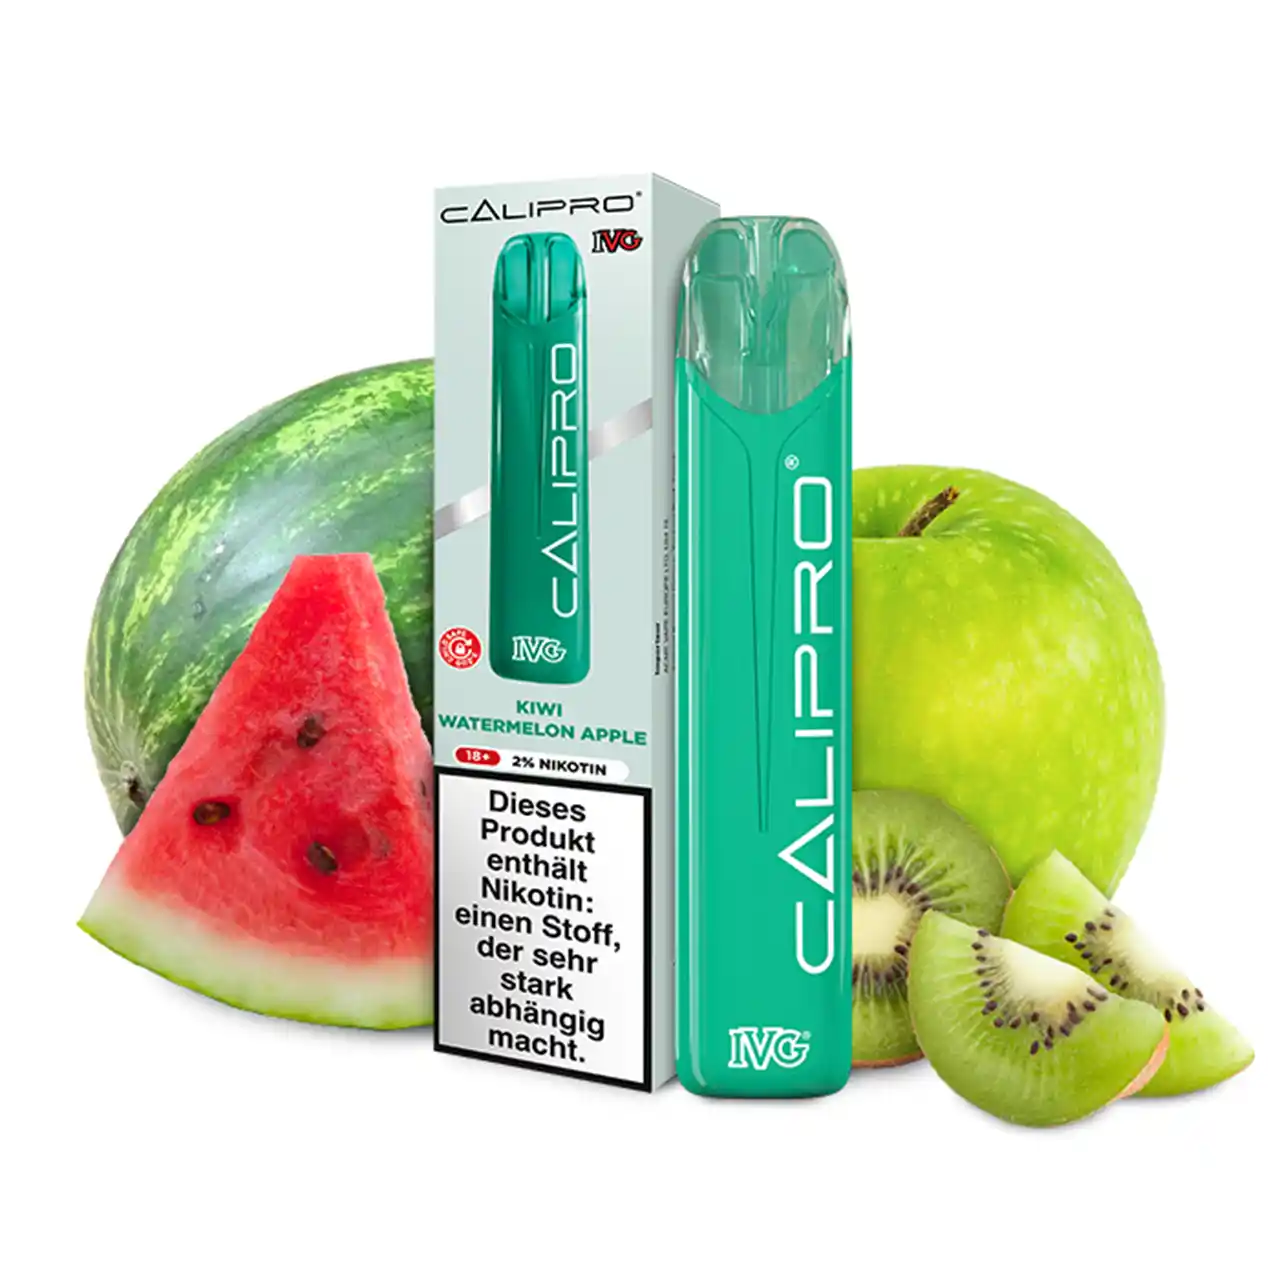 IVG Calipro Kiwi Watermelon Apple Symbolbild